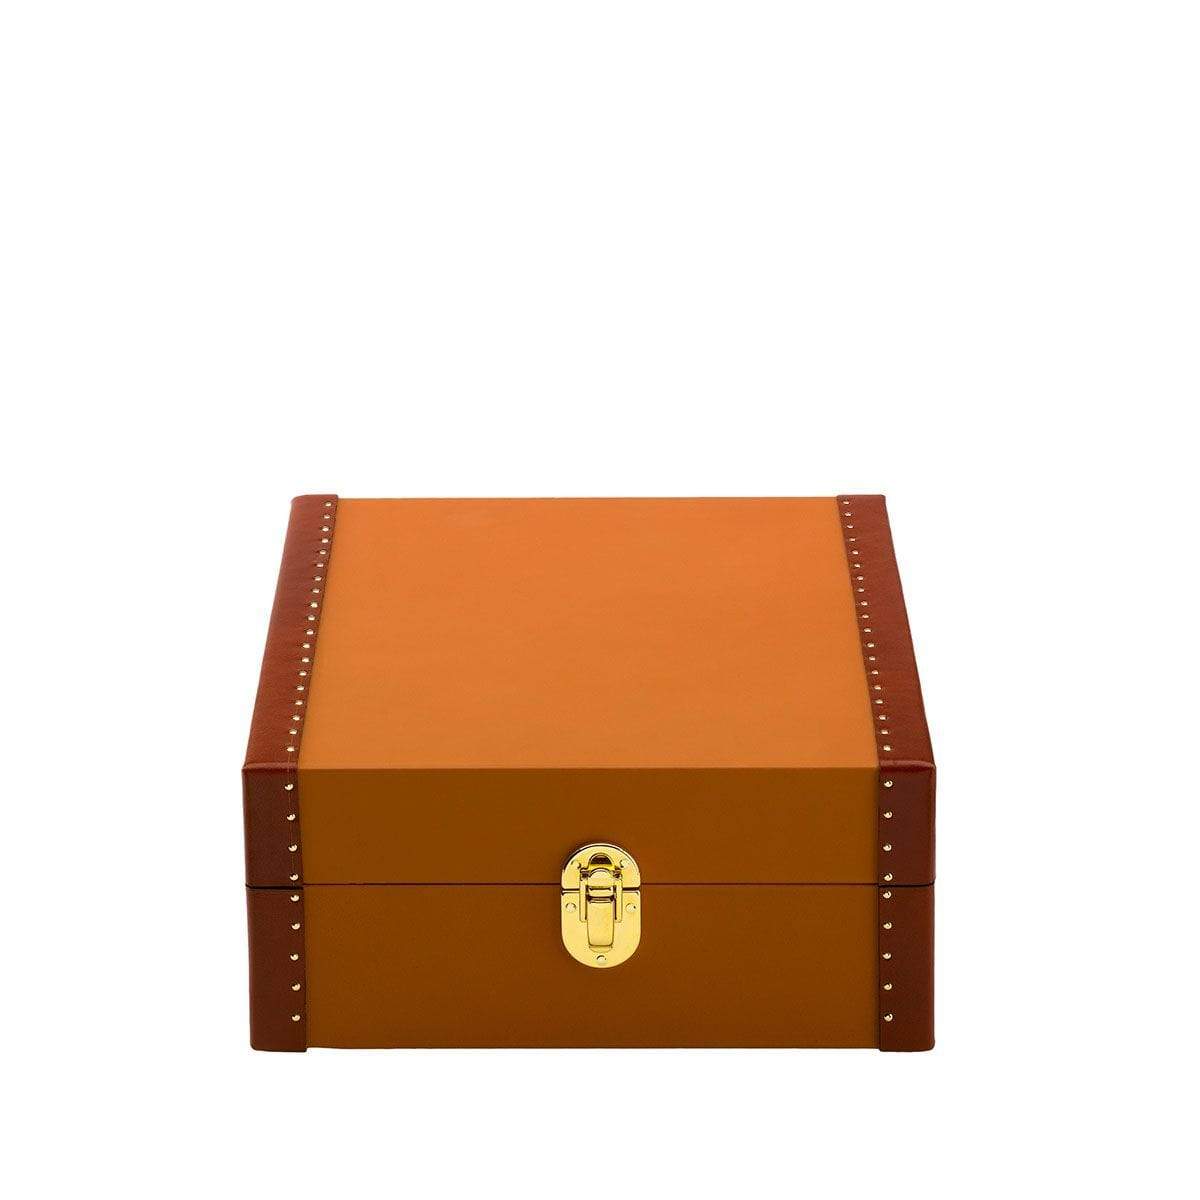 Rapport Kensington Leather 6 Watch Box - Tan